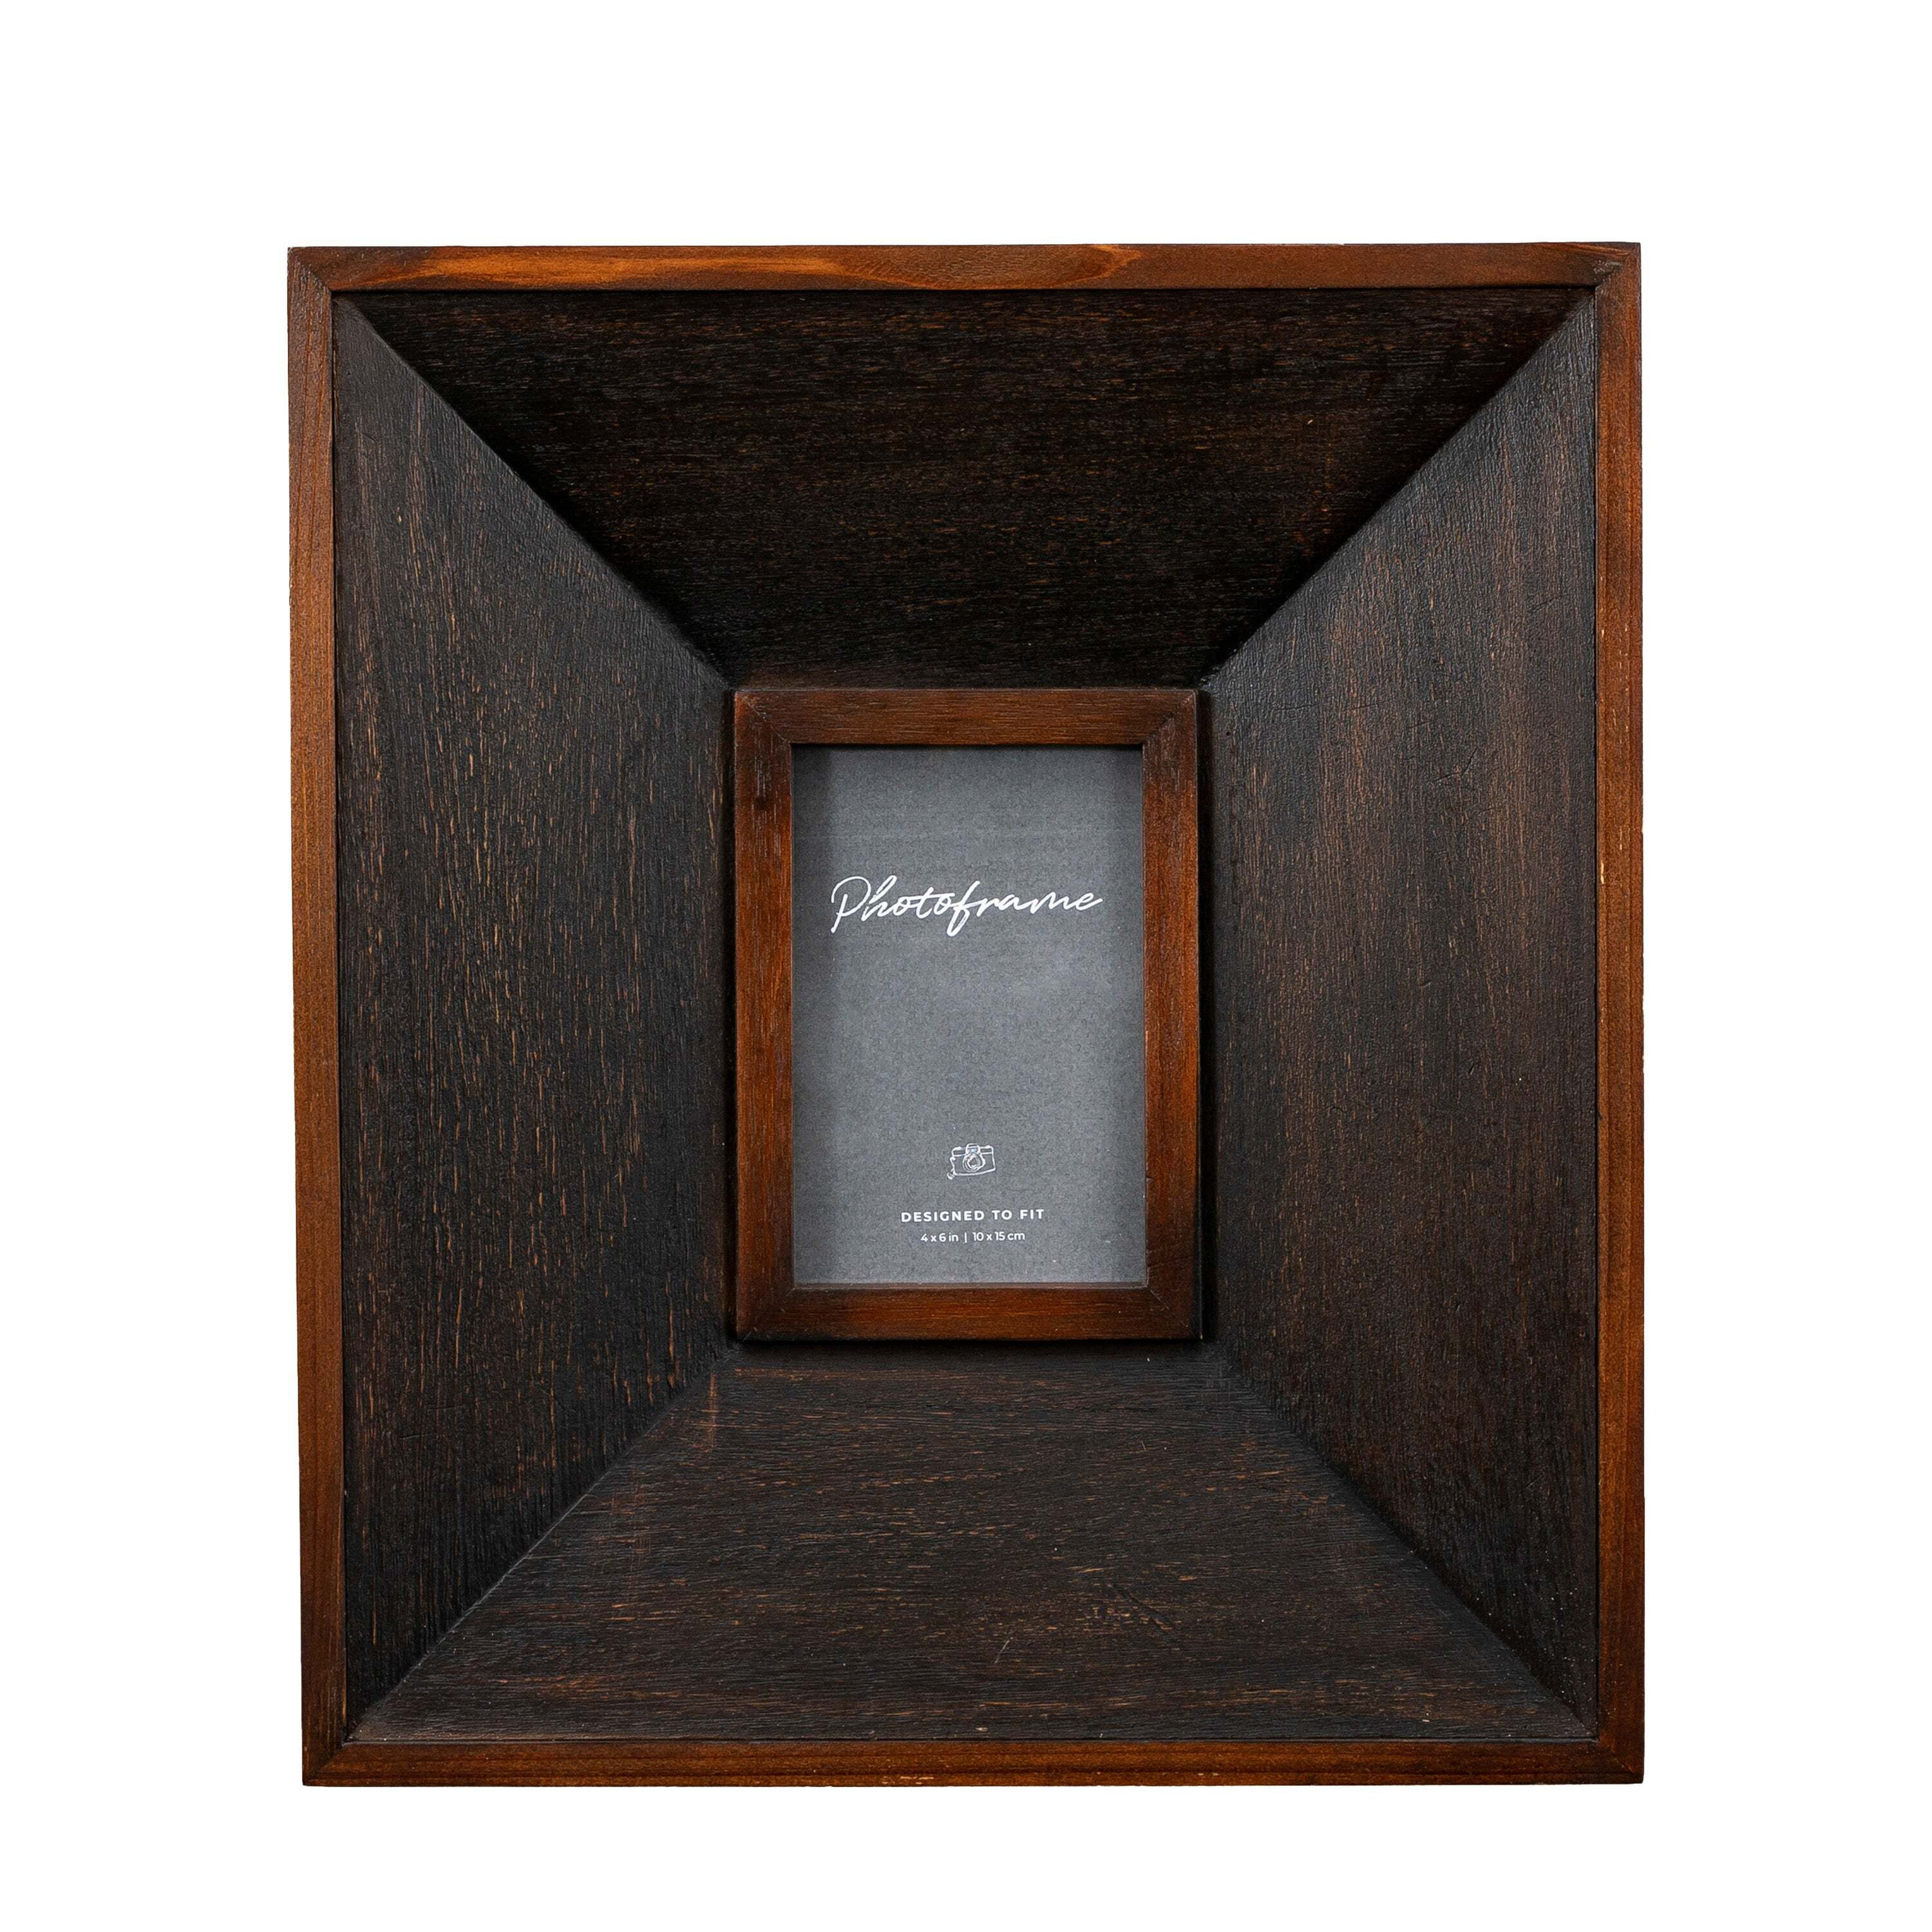 "Ingleby Strand Rectangle Photo Frame 6"" x 4"" (15cm x 10cm) Black"